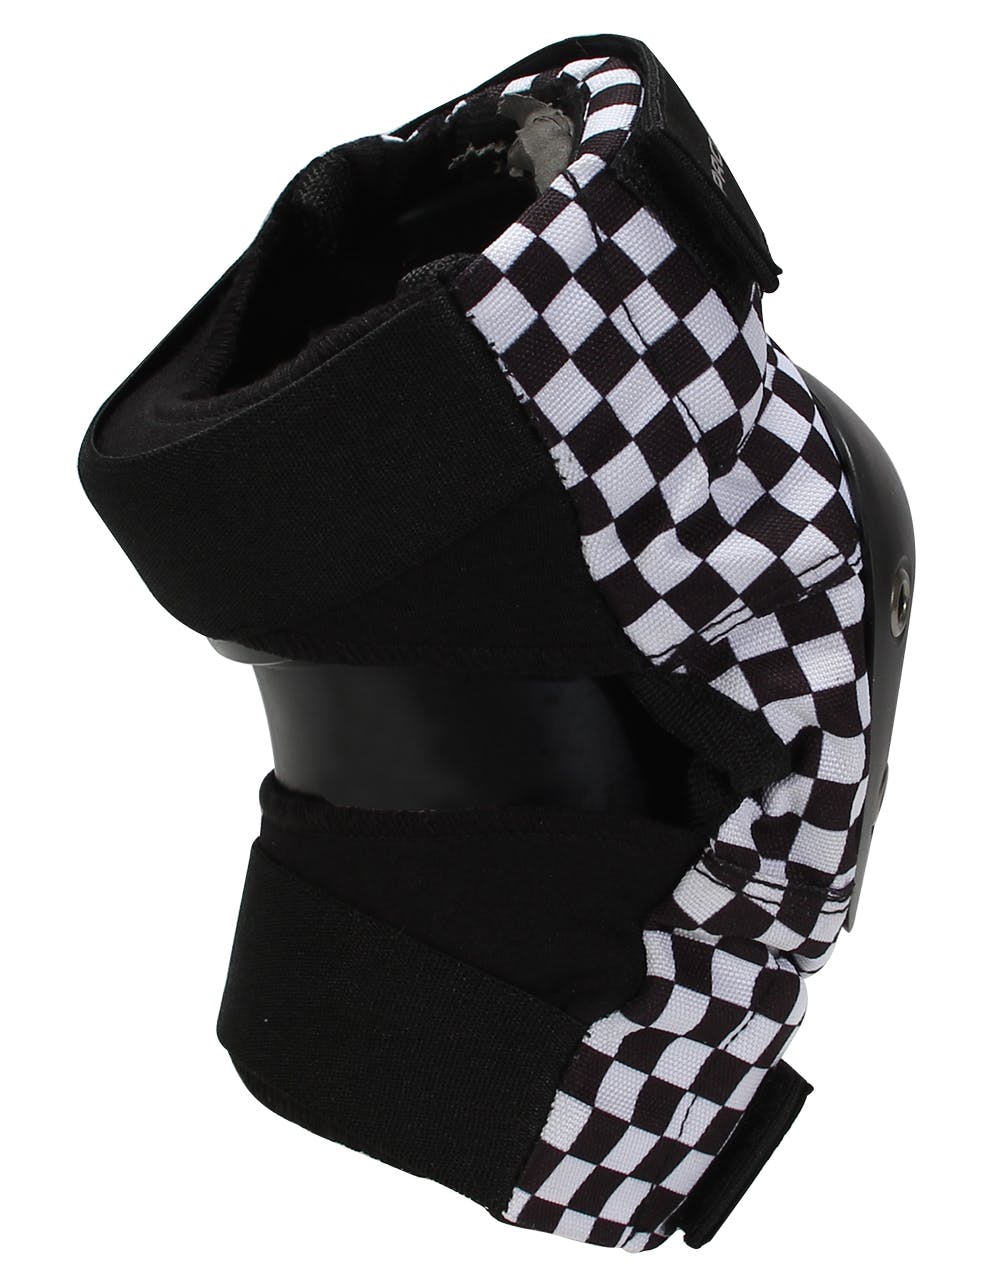 Pro-Tec Street Elbow Pads - Black/White Checker